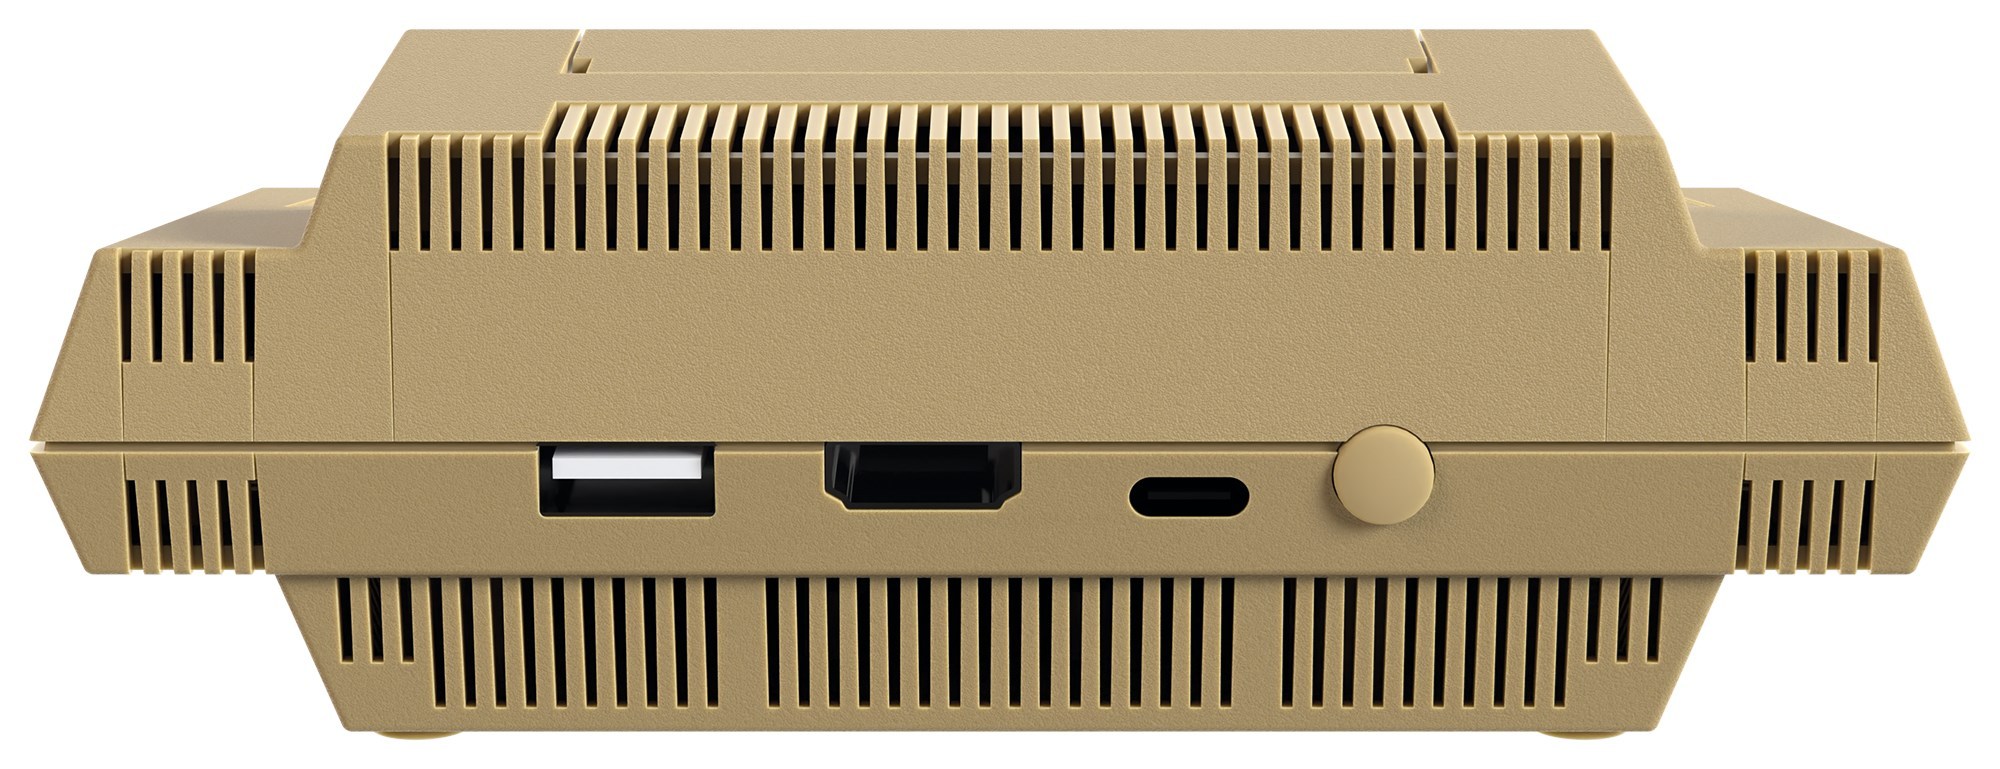 Atari THE400 Mini back